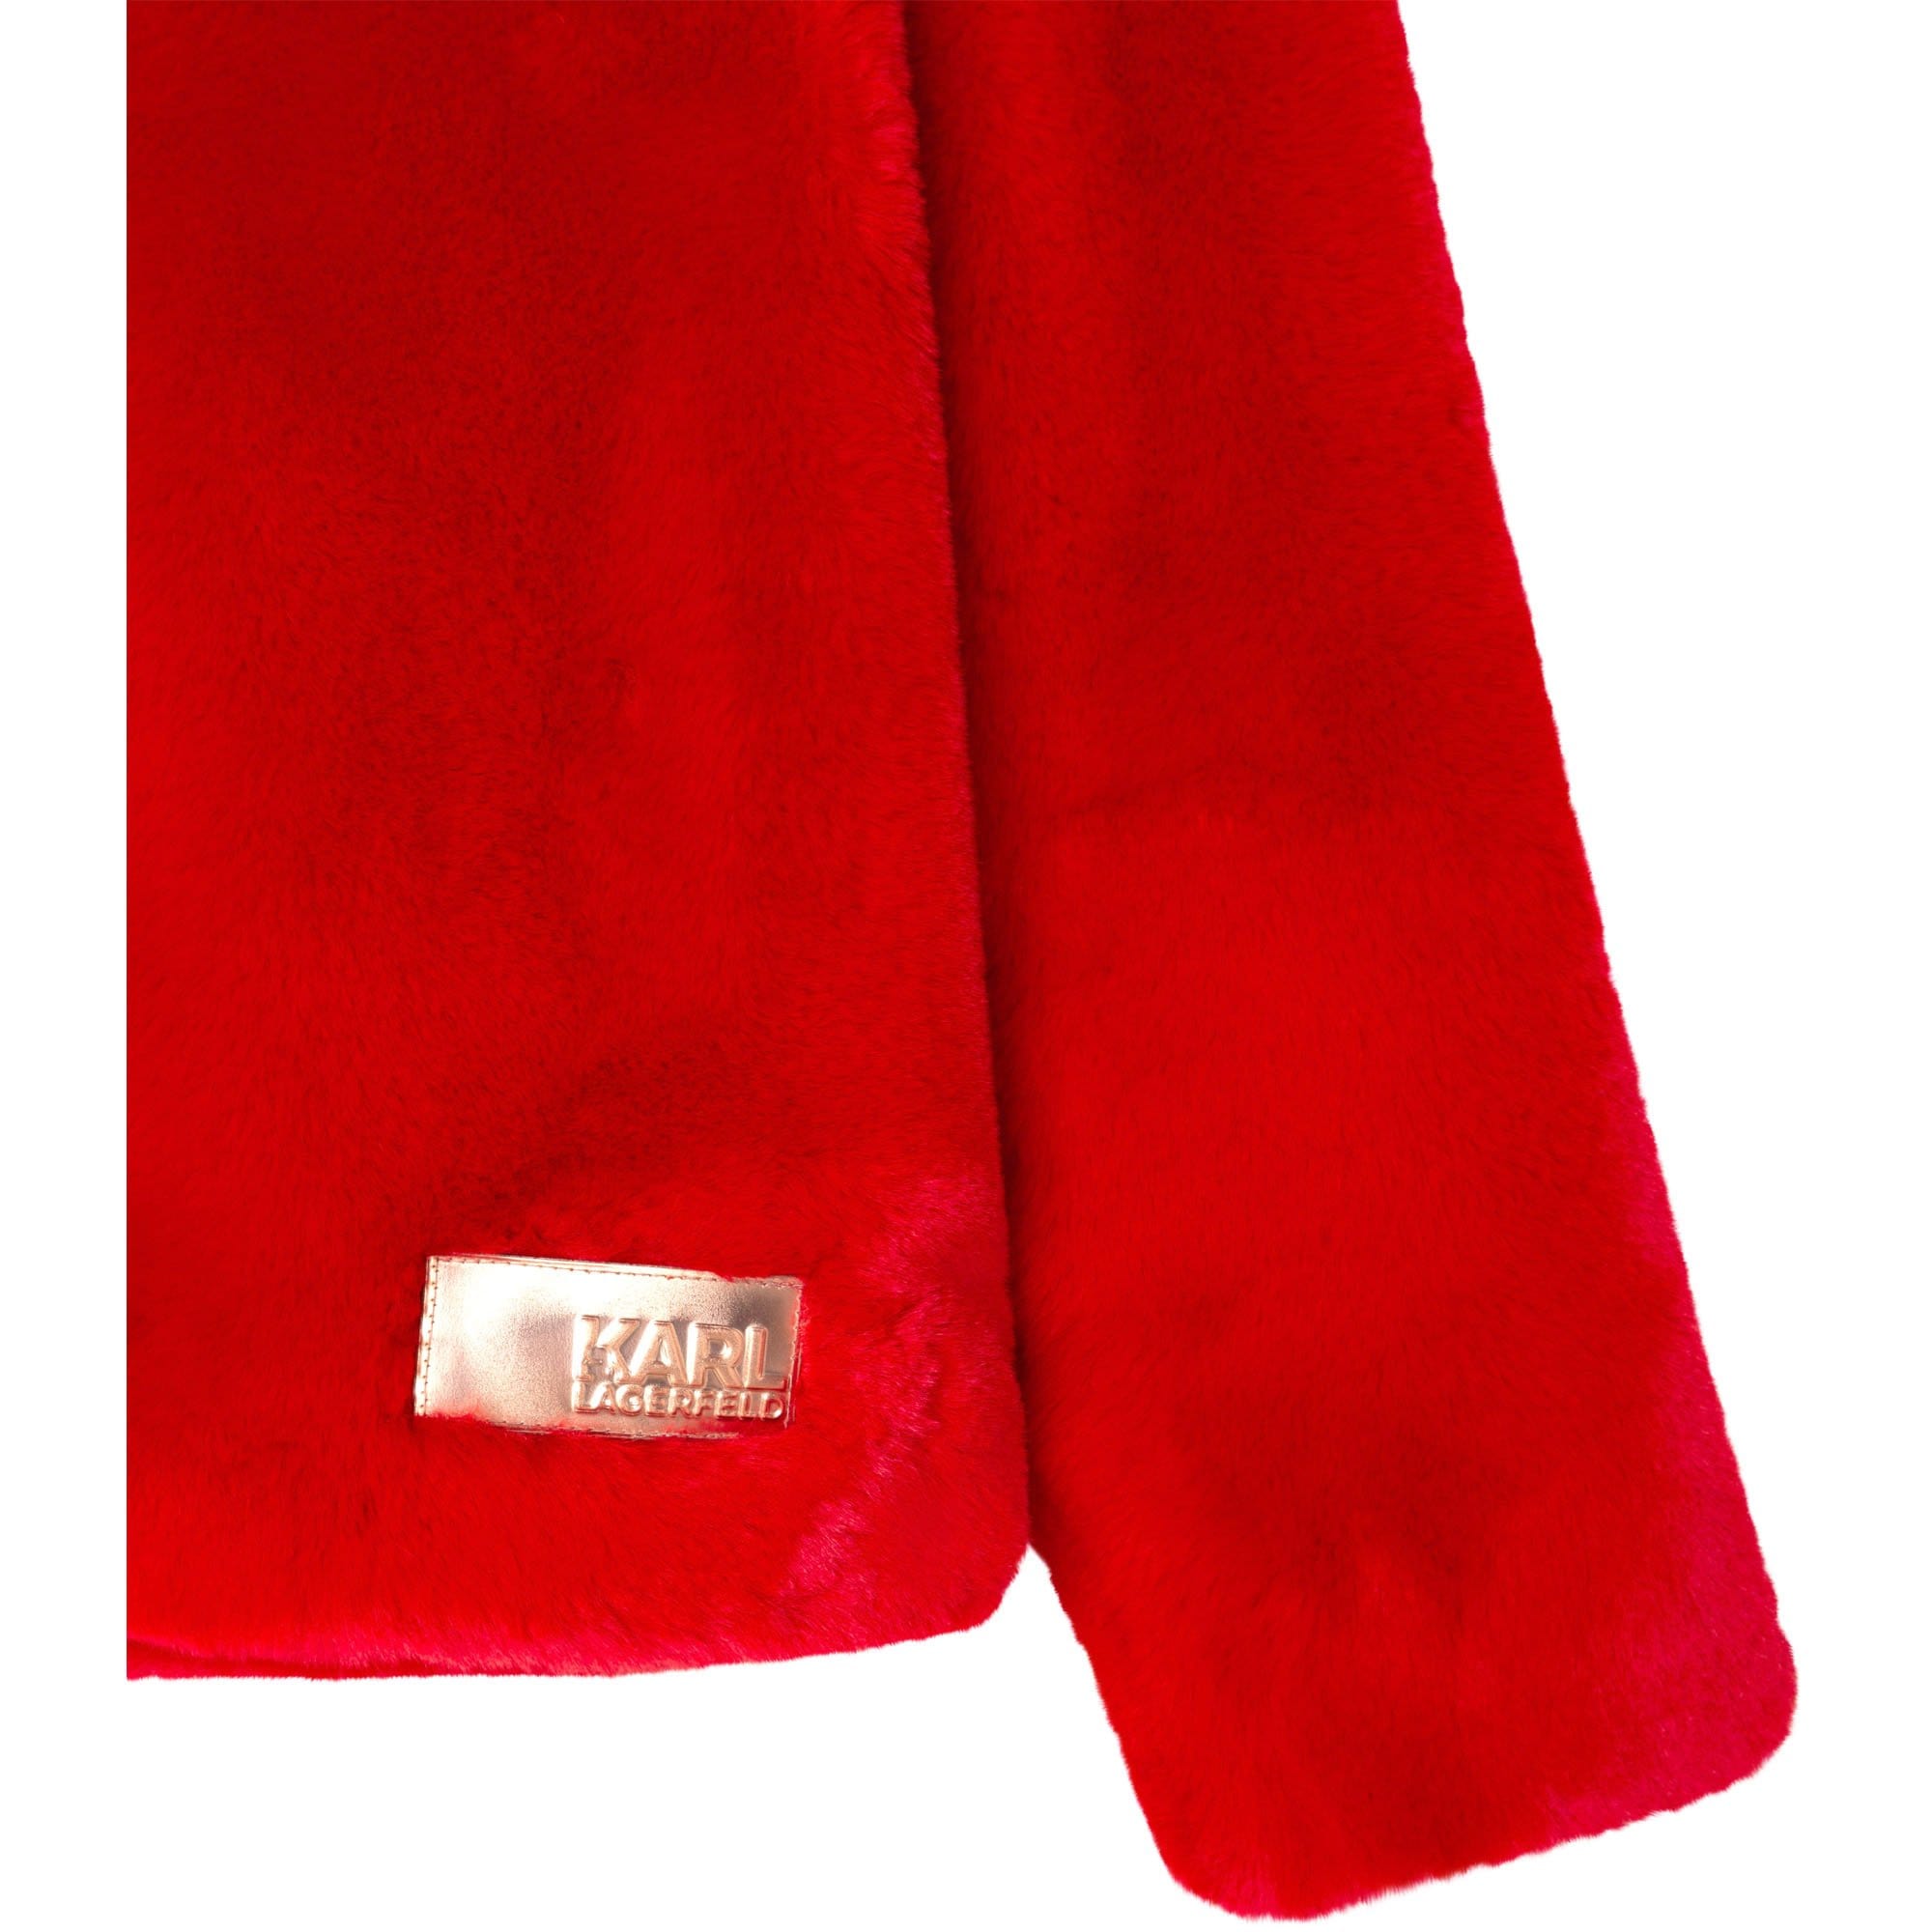 Karl Lagerfeld - Faux Fur Jacket - Red